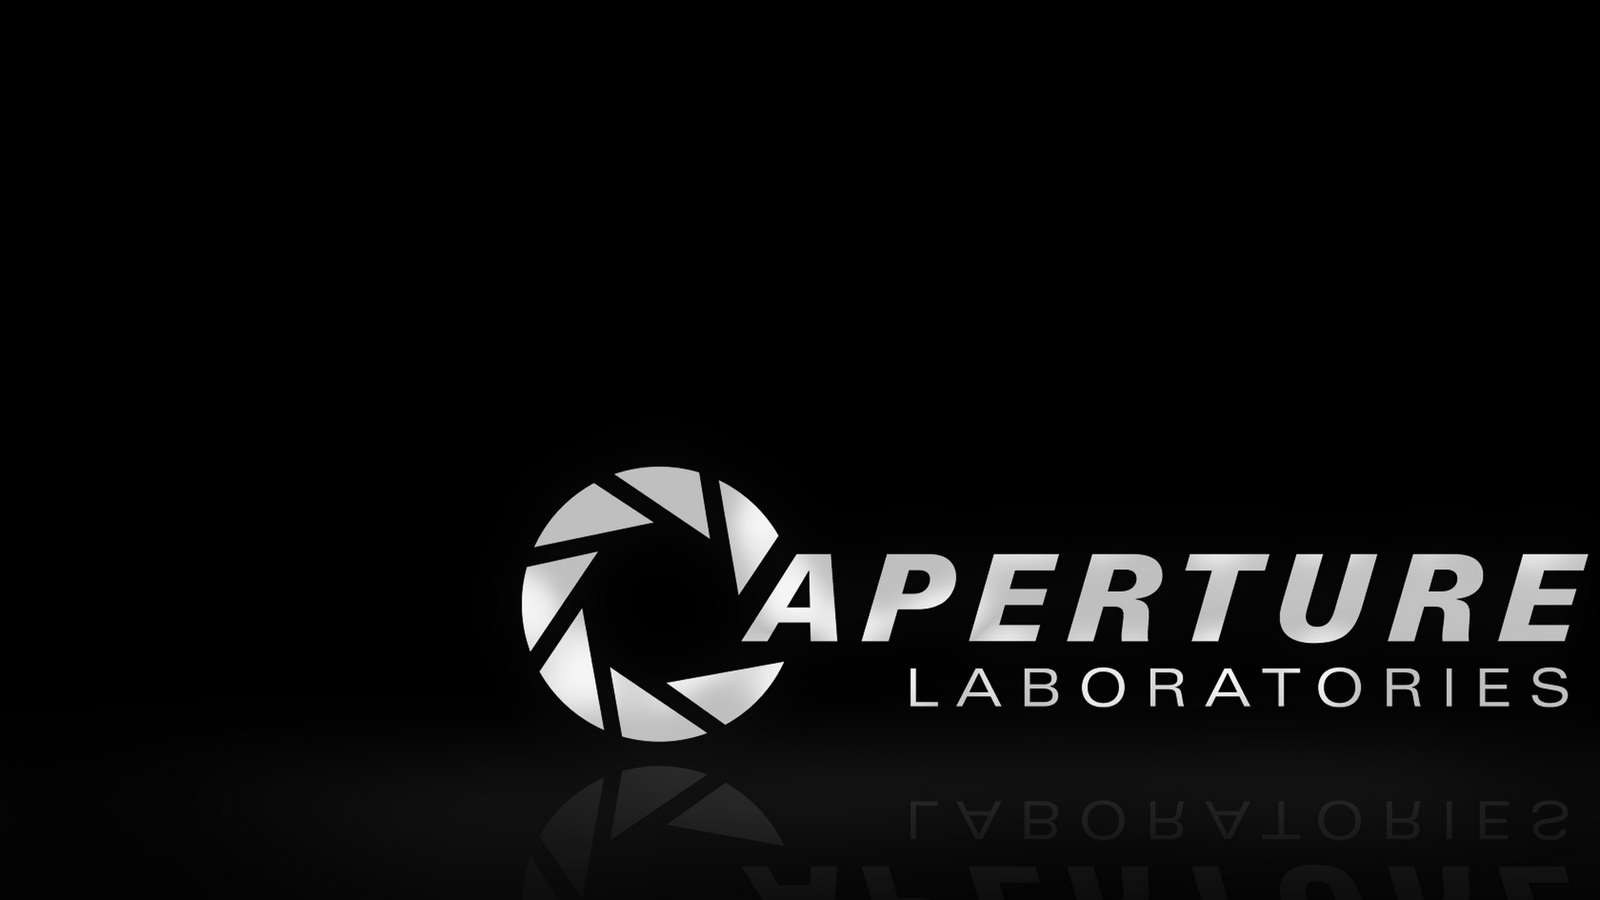 Aperture Laboratories HDq Wallpaper